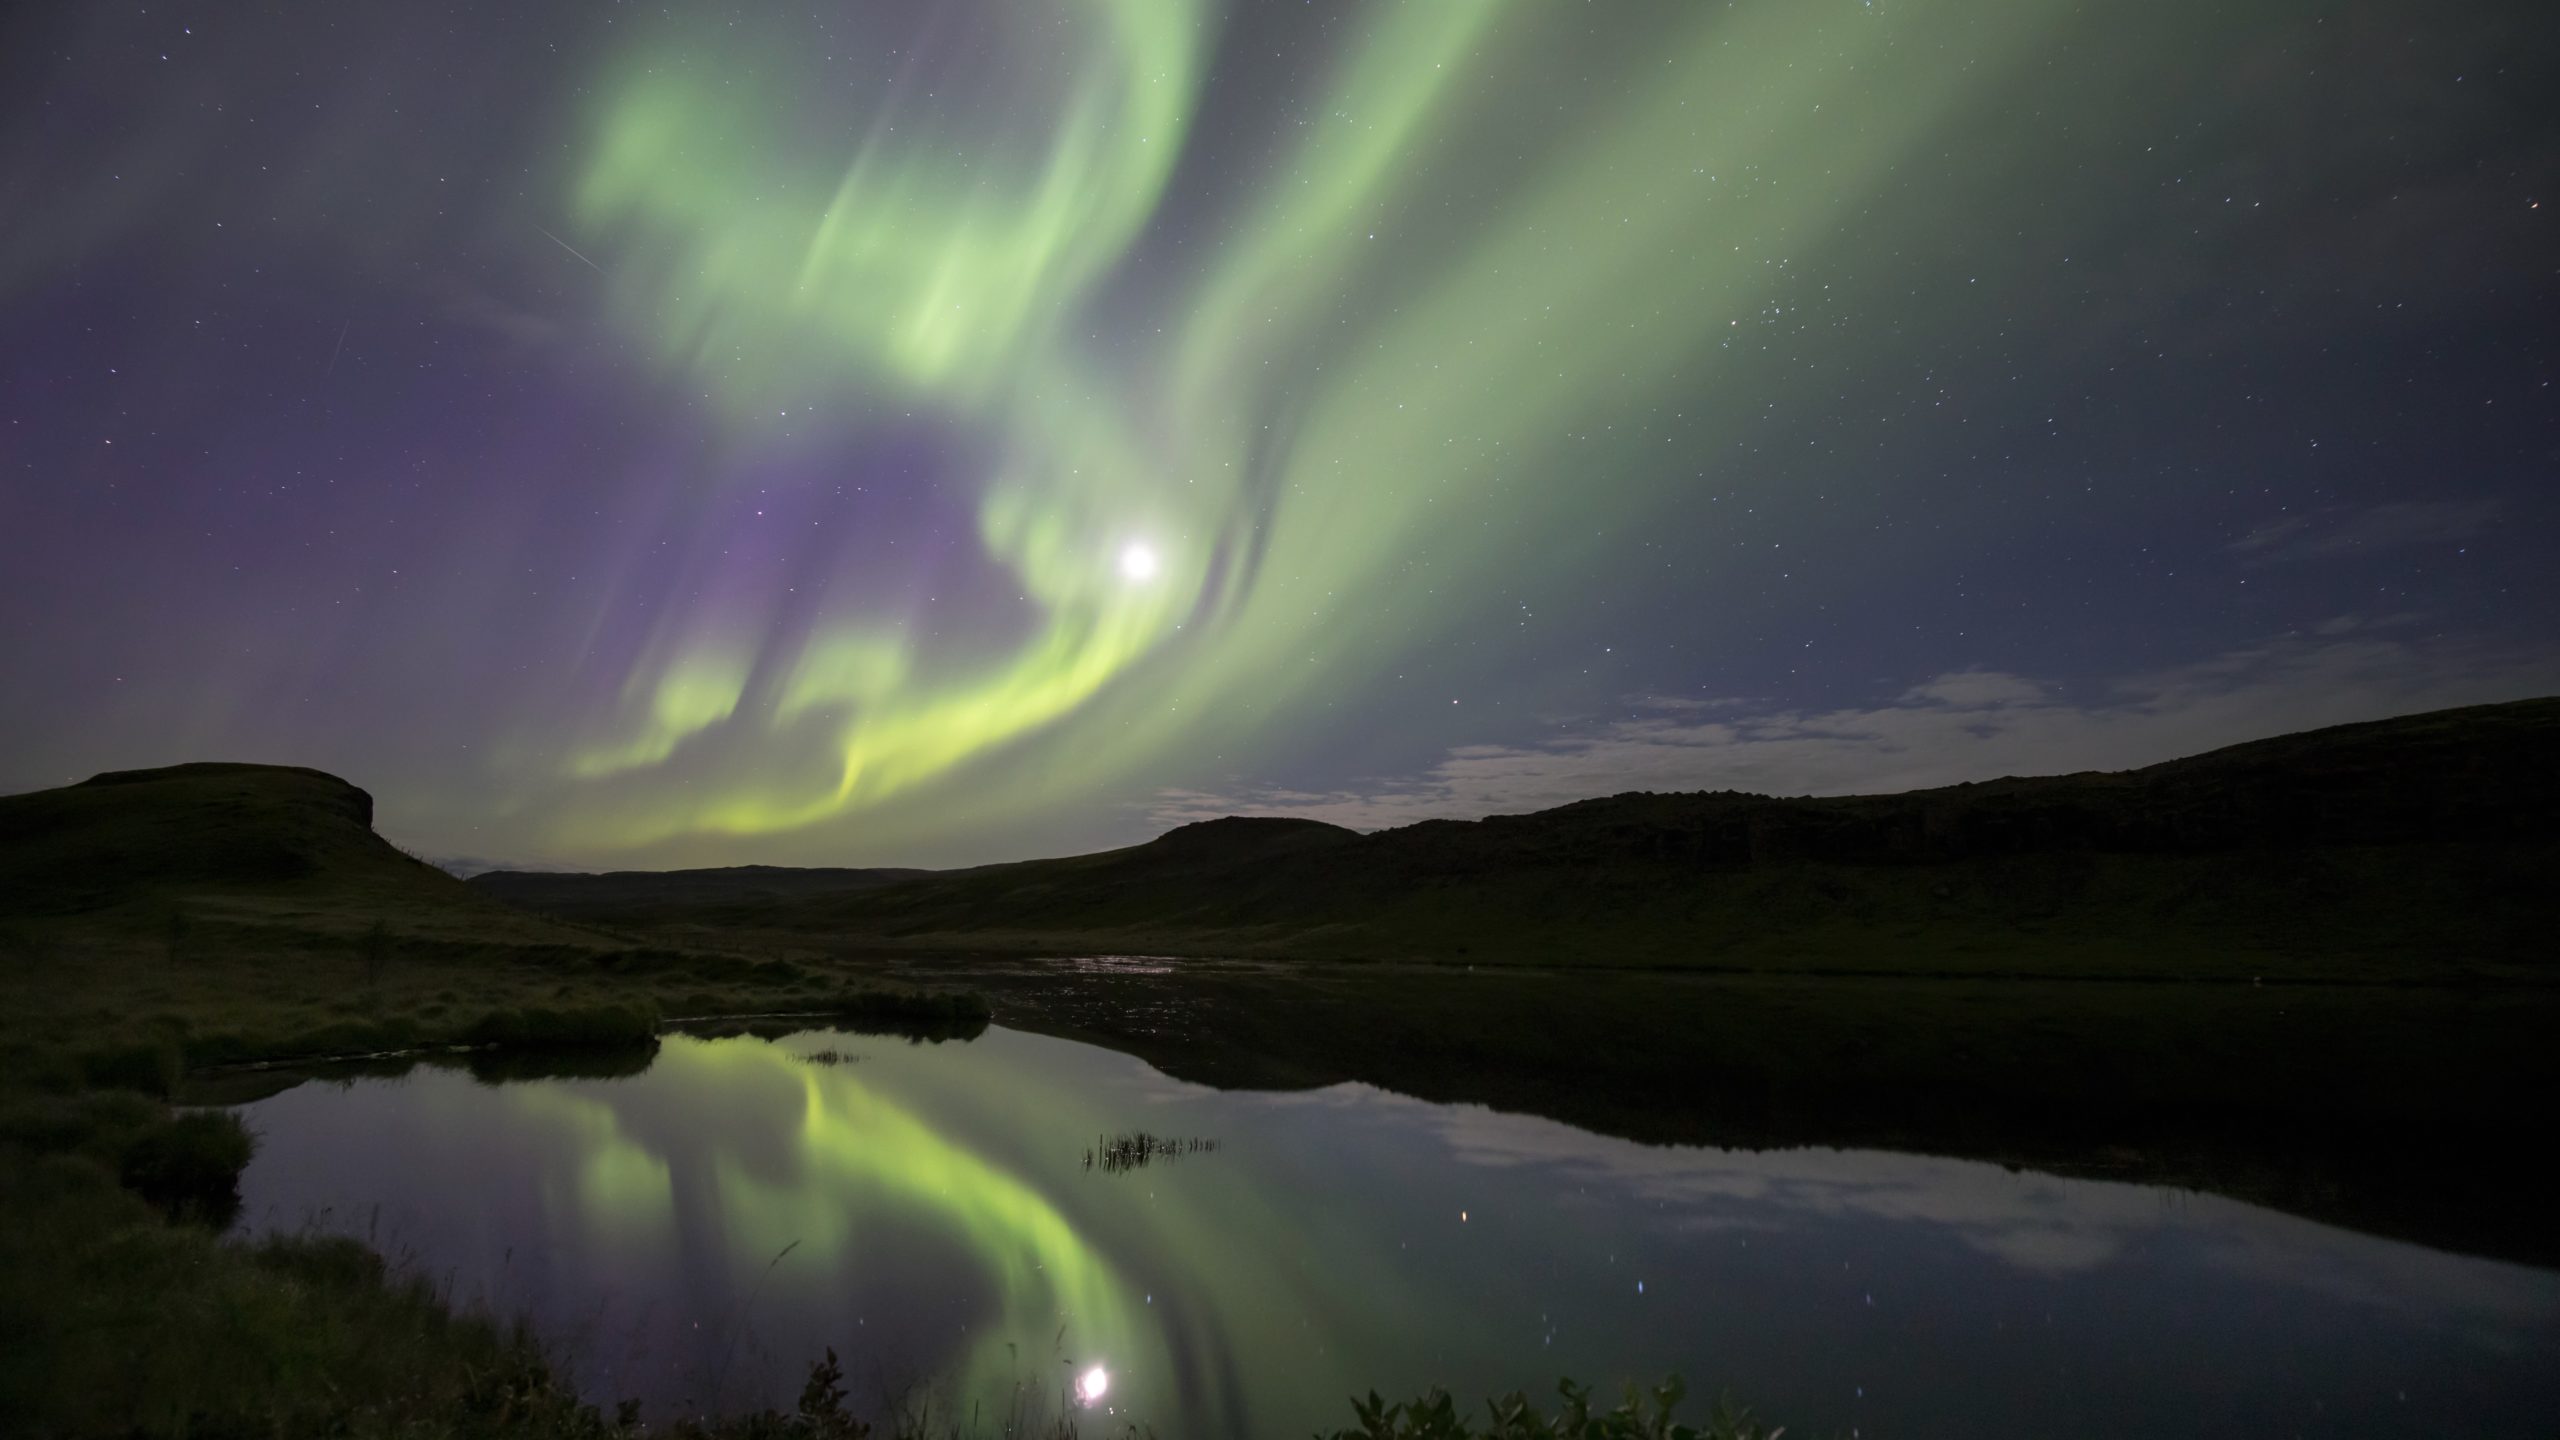 Iceland's northern lights season